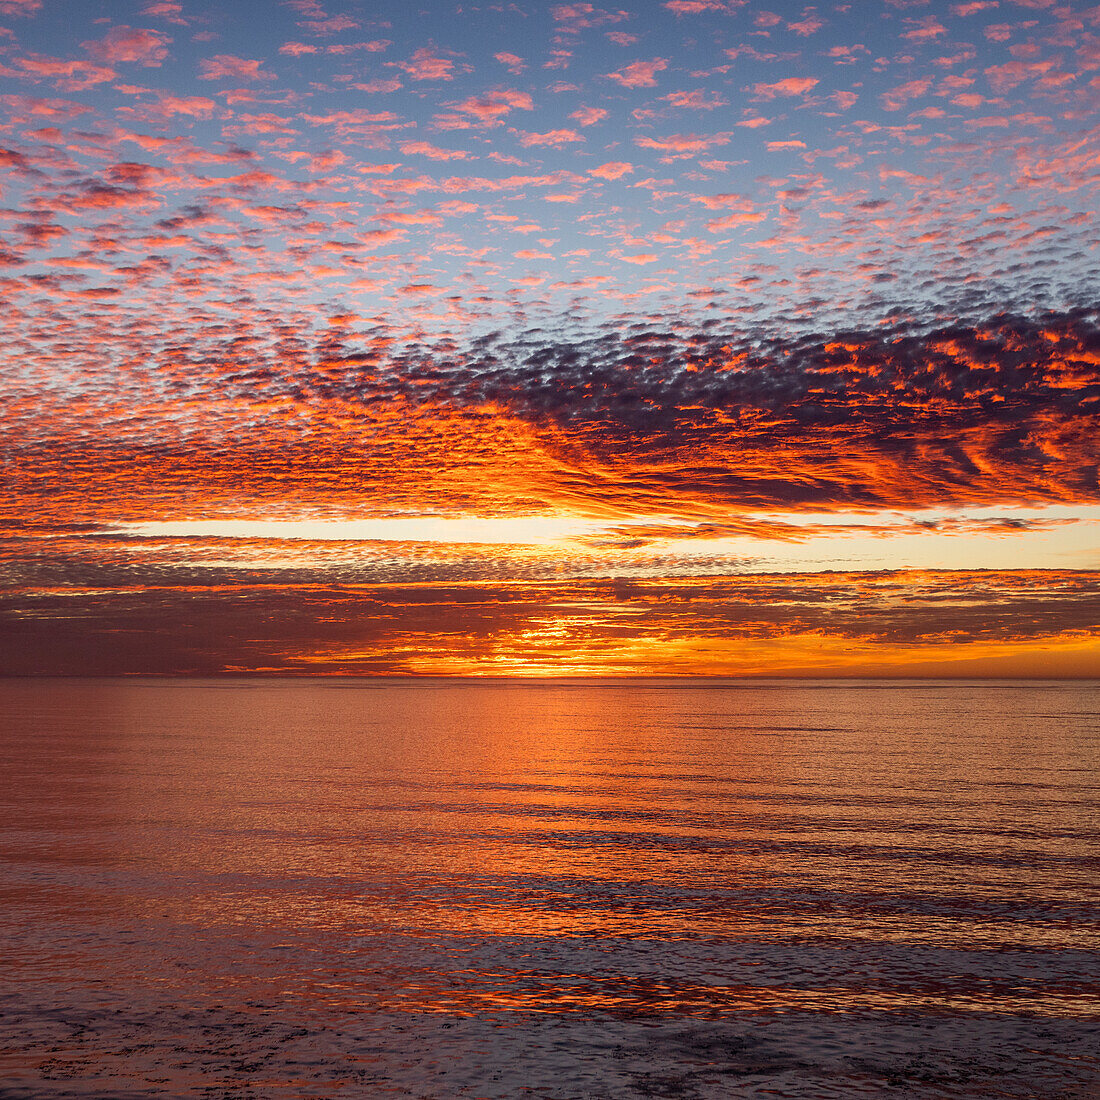 United States, California, Big Sur, Cirrus clouds over ocean at sunset